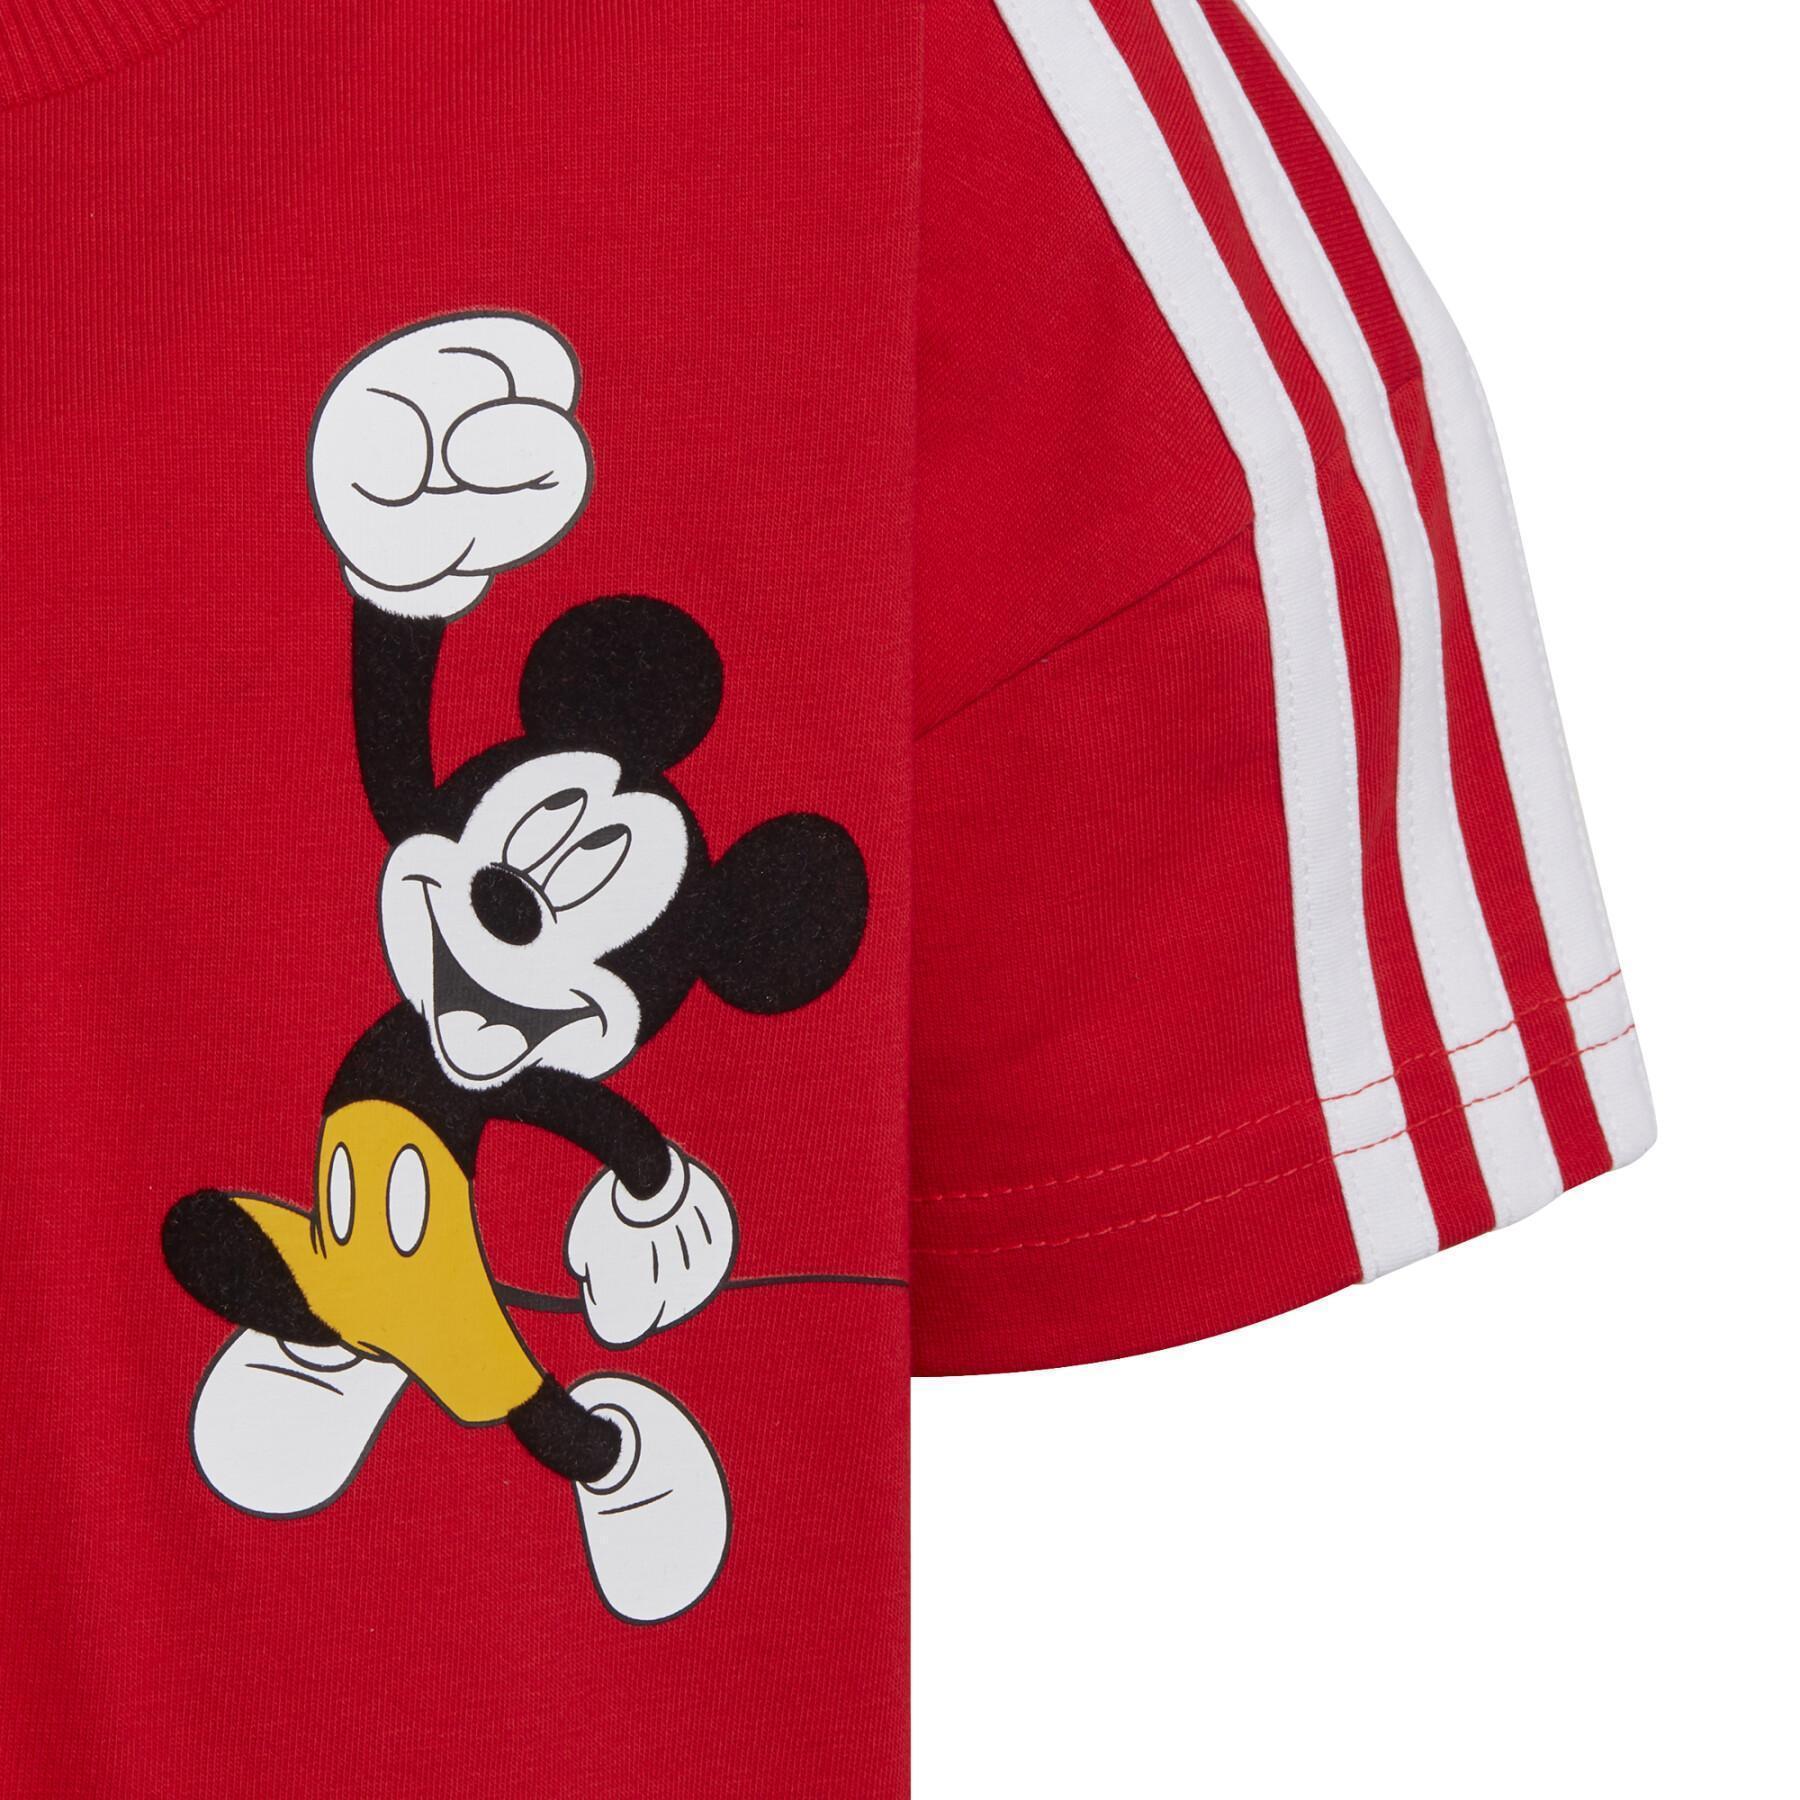 Kinder T-shirt adidas Disney Mickey Mouse